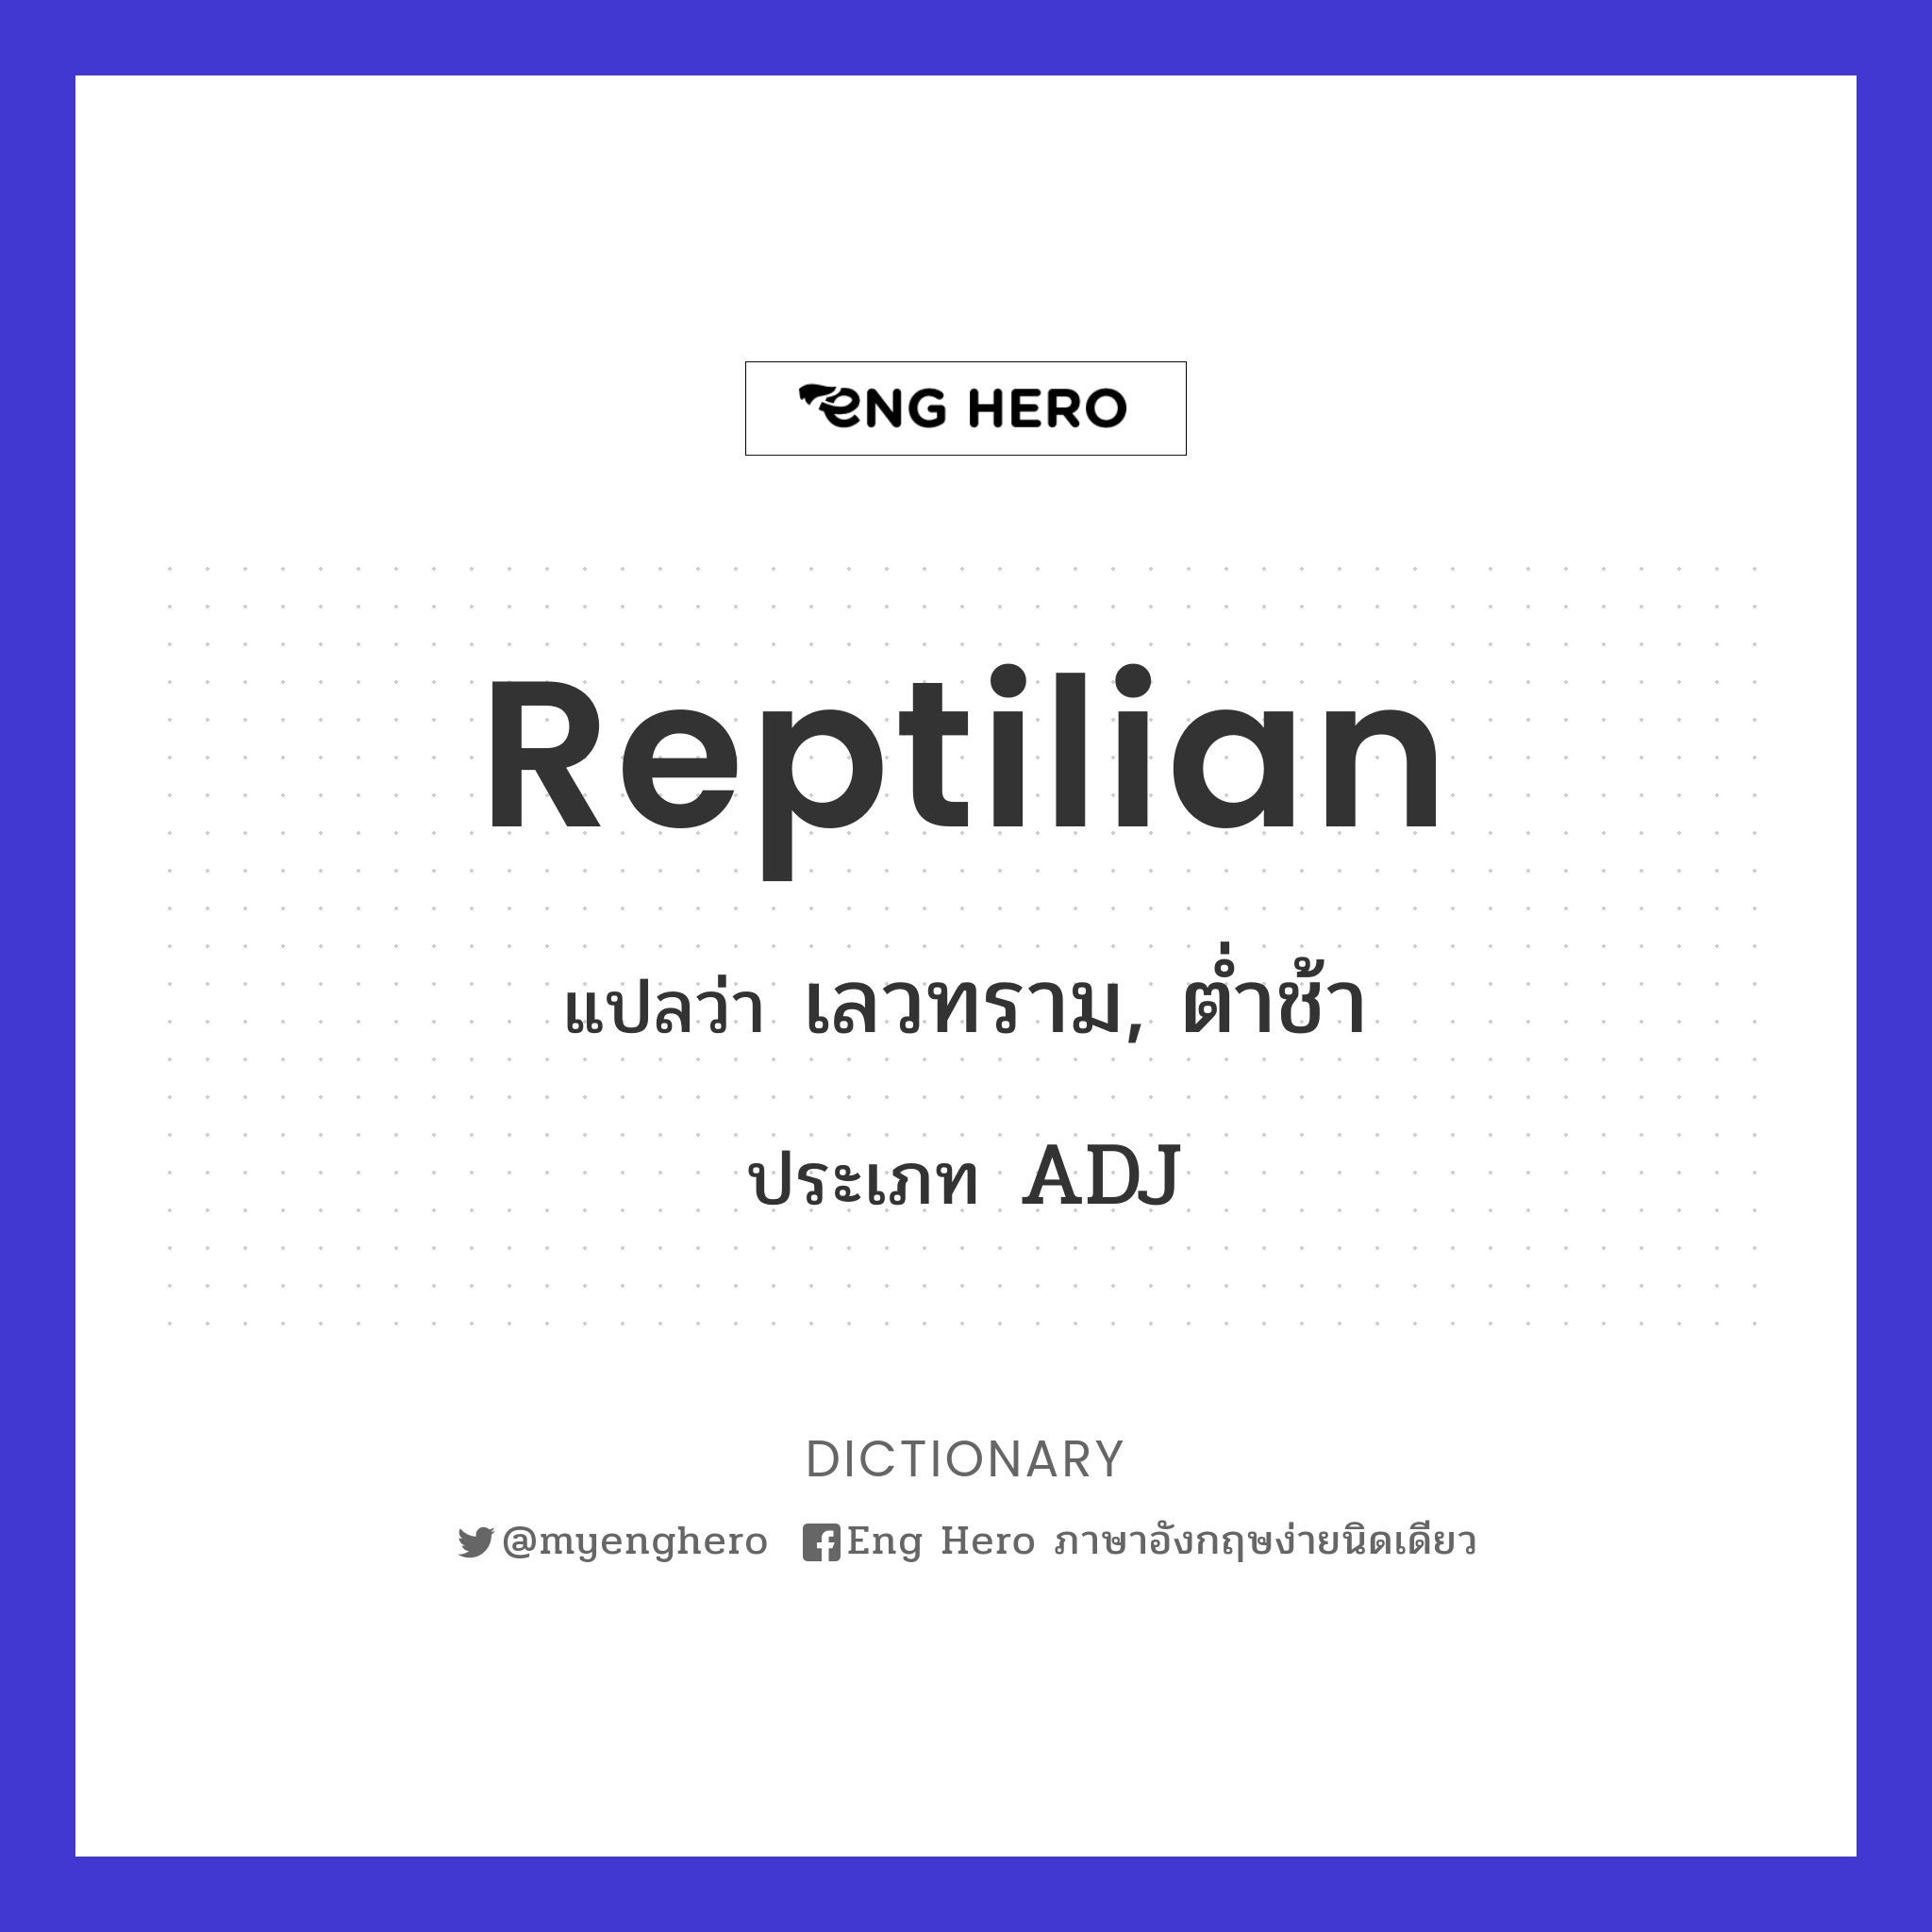 reptilian